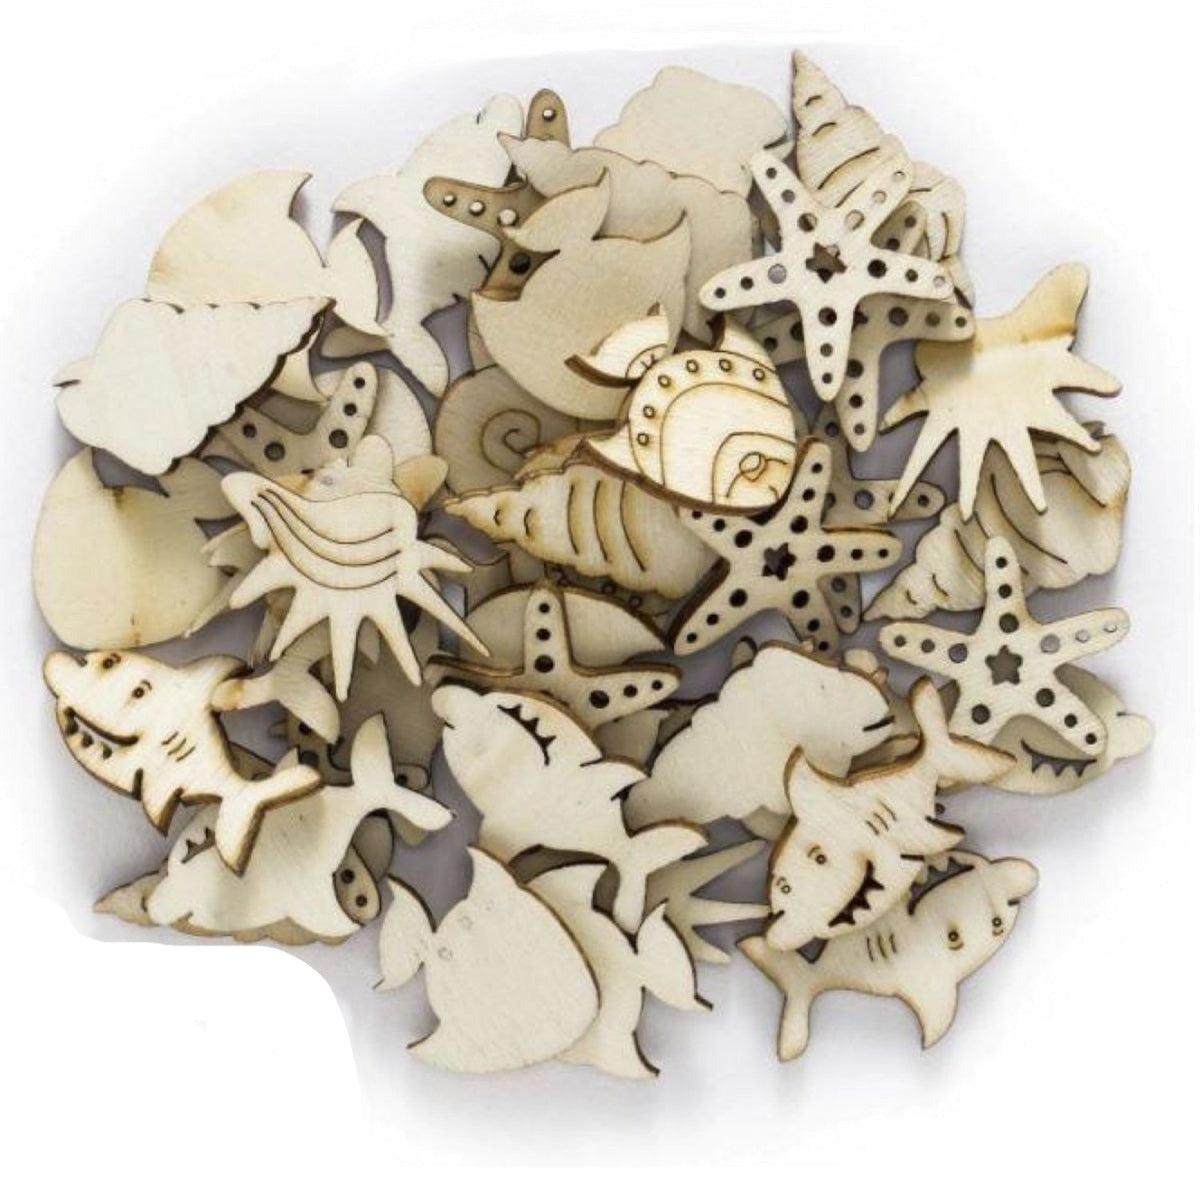 30Pcs Sea Animals Wooden Diy Craft Wood Scrapbooking Fish Seahorse Shark Starfish Mollusc Toys And